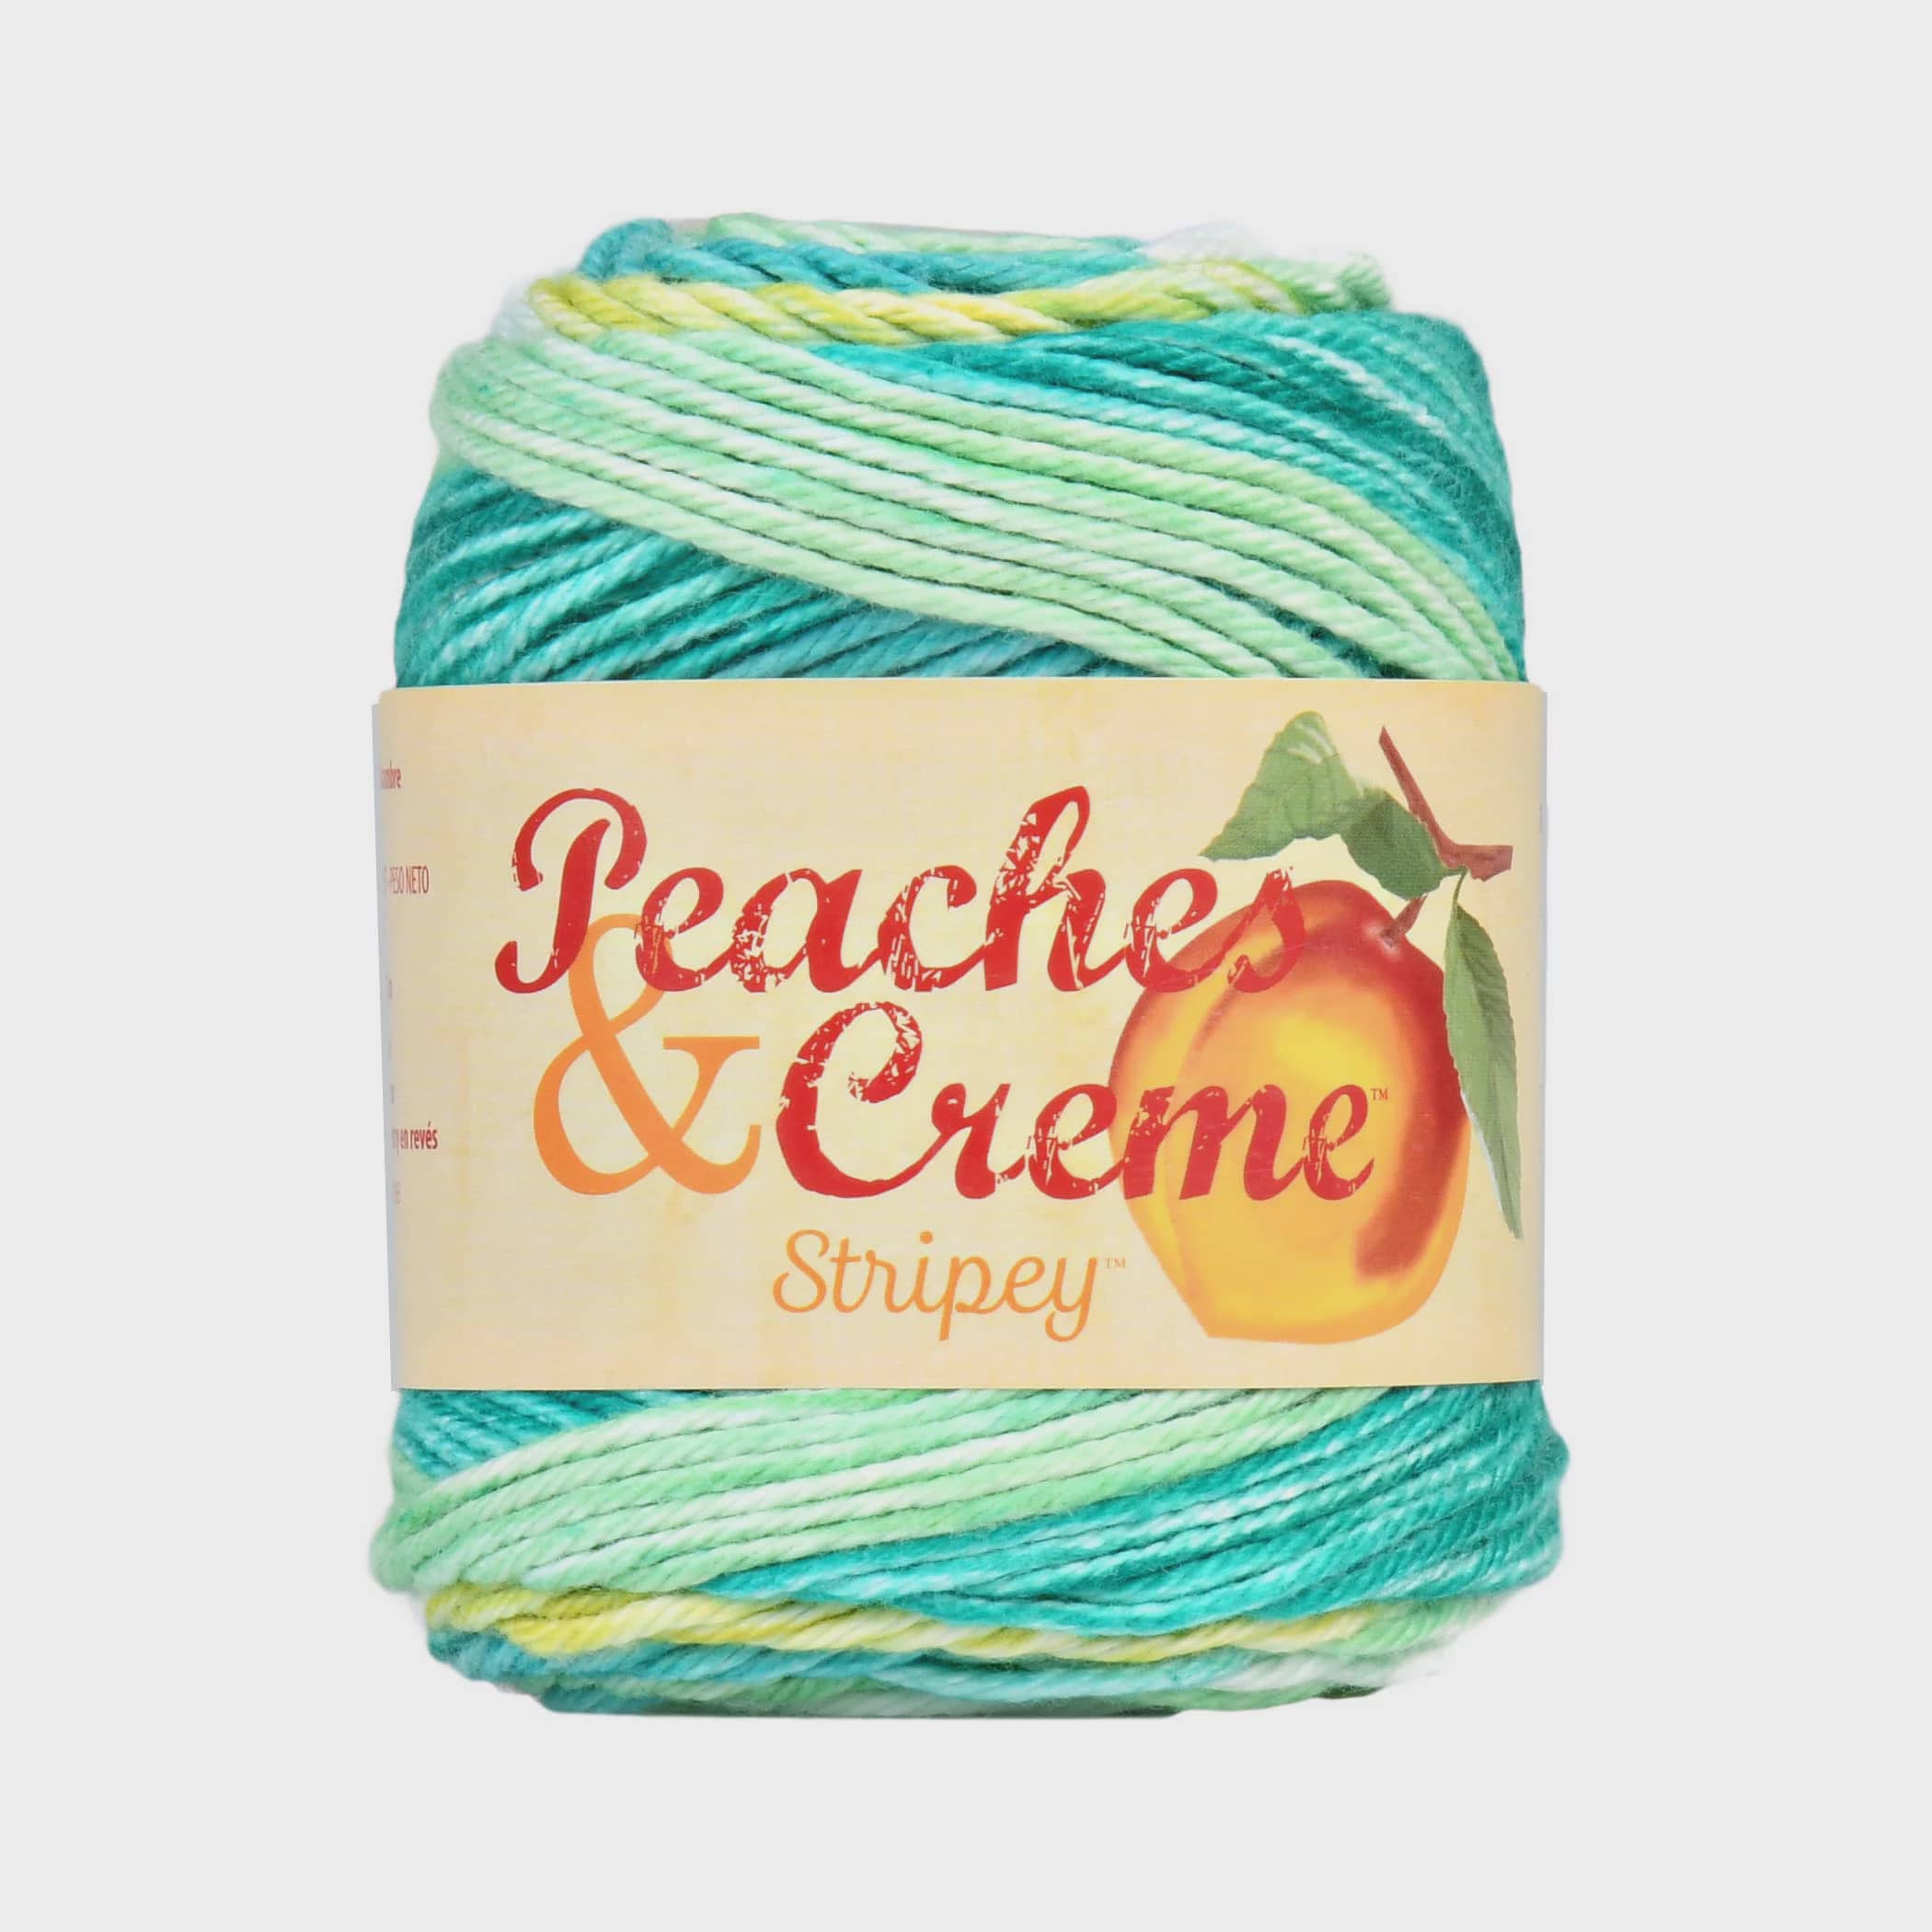 Peaches & Creme Stripey 4 Medium Cotton Yarn, Green Stripes 2oz/56.7g, 102  Yards - DroneUp Delivery